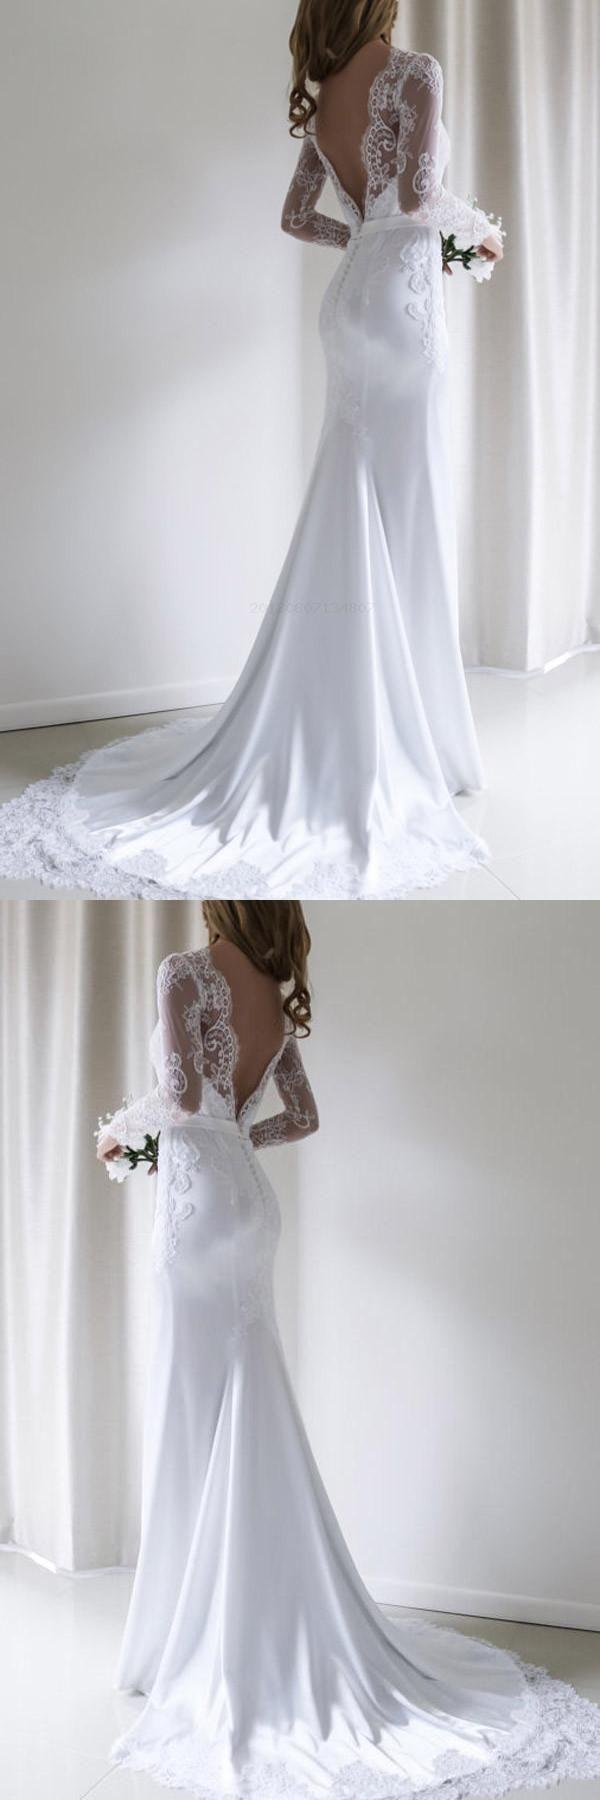 زفاف - Hot Sale Admirable Mermaid Wedding Dresses Elegant Lace Long Sleeves Mermaid White Long Wedding Dress With Train